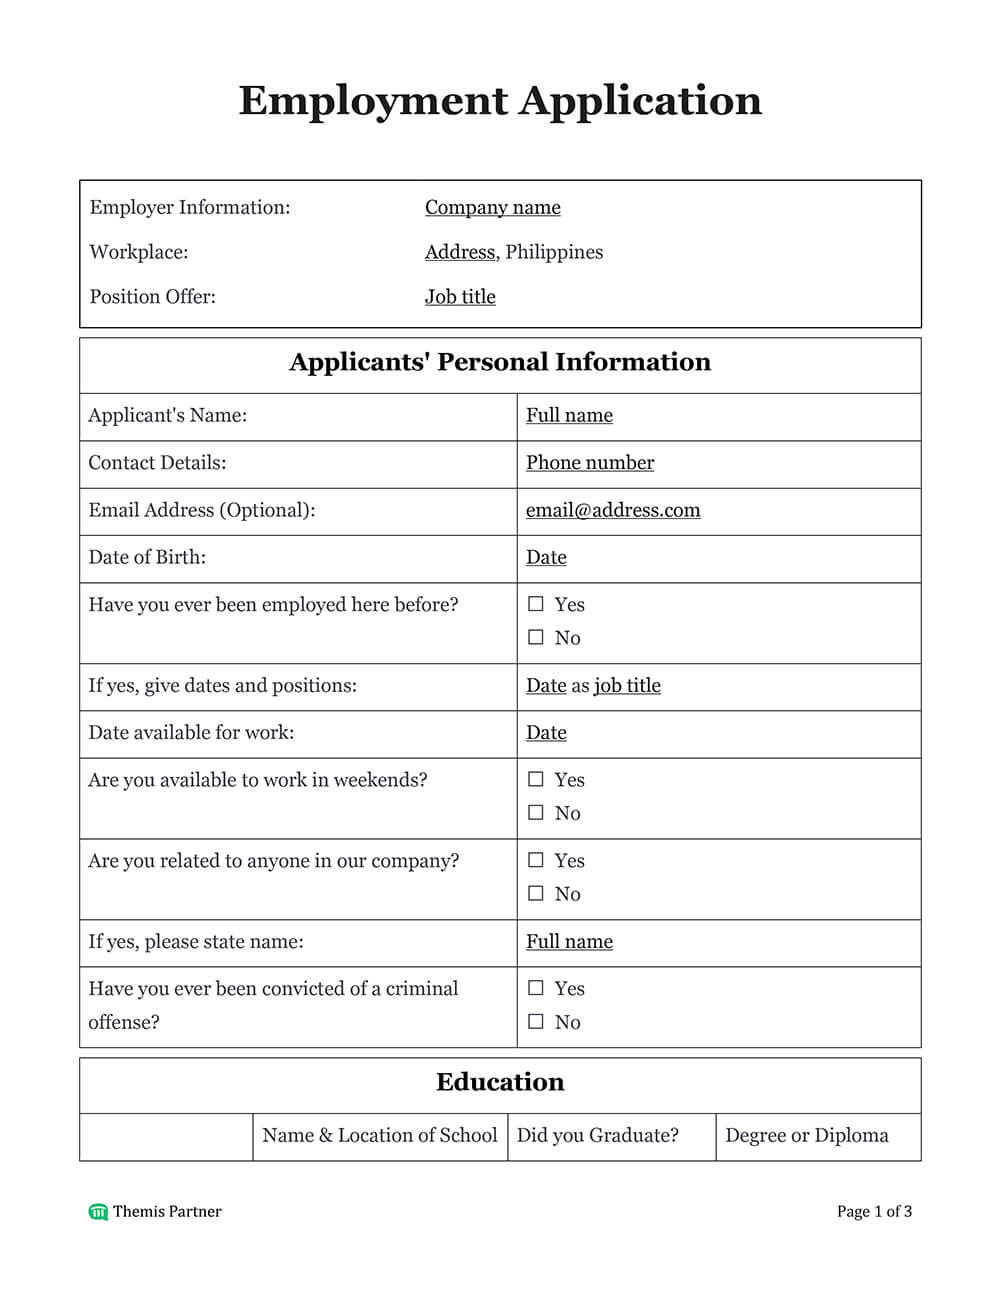 Employment application template